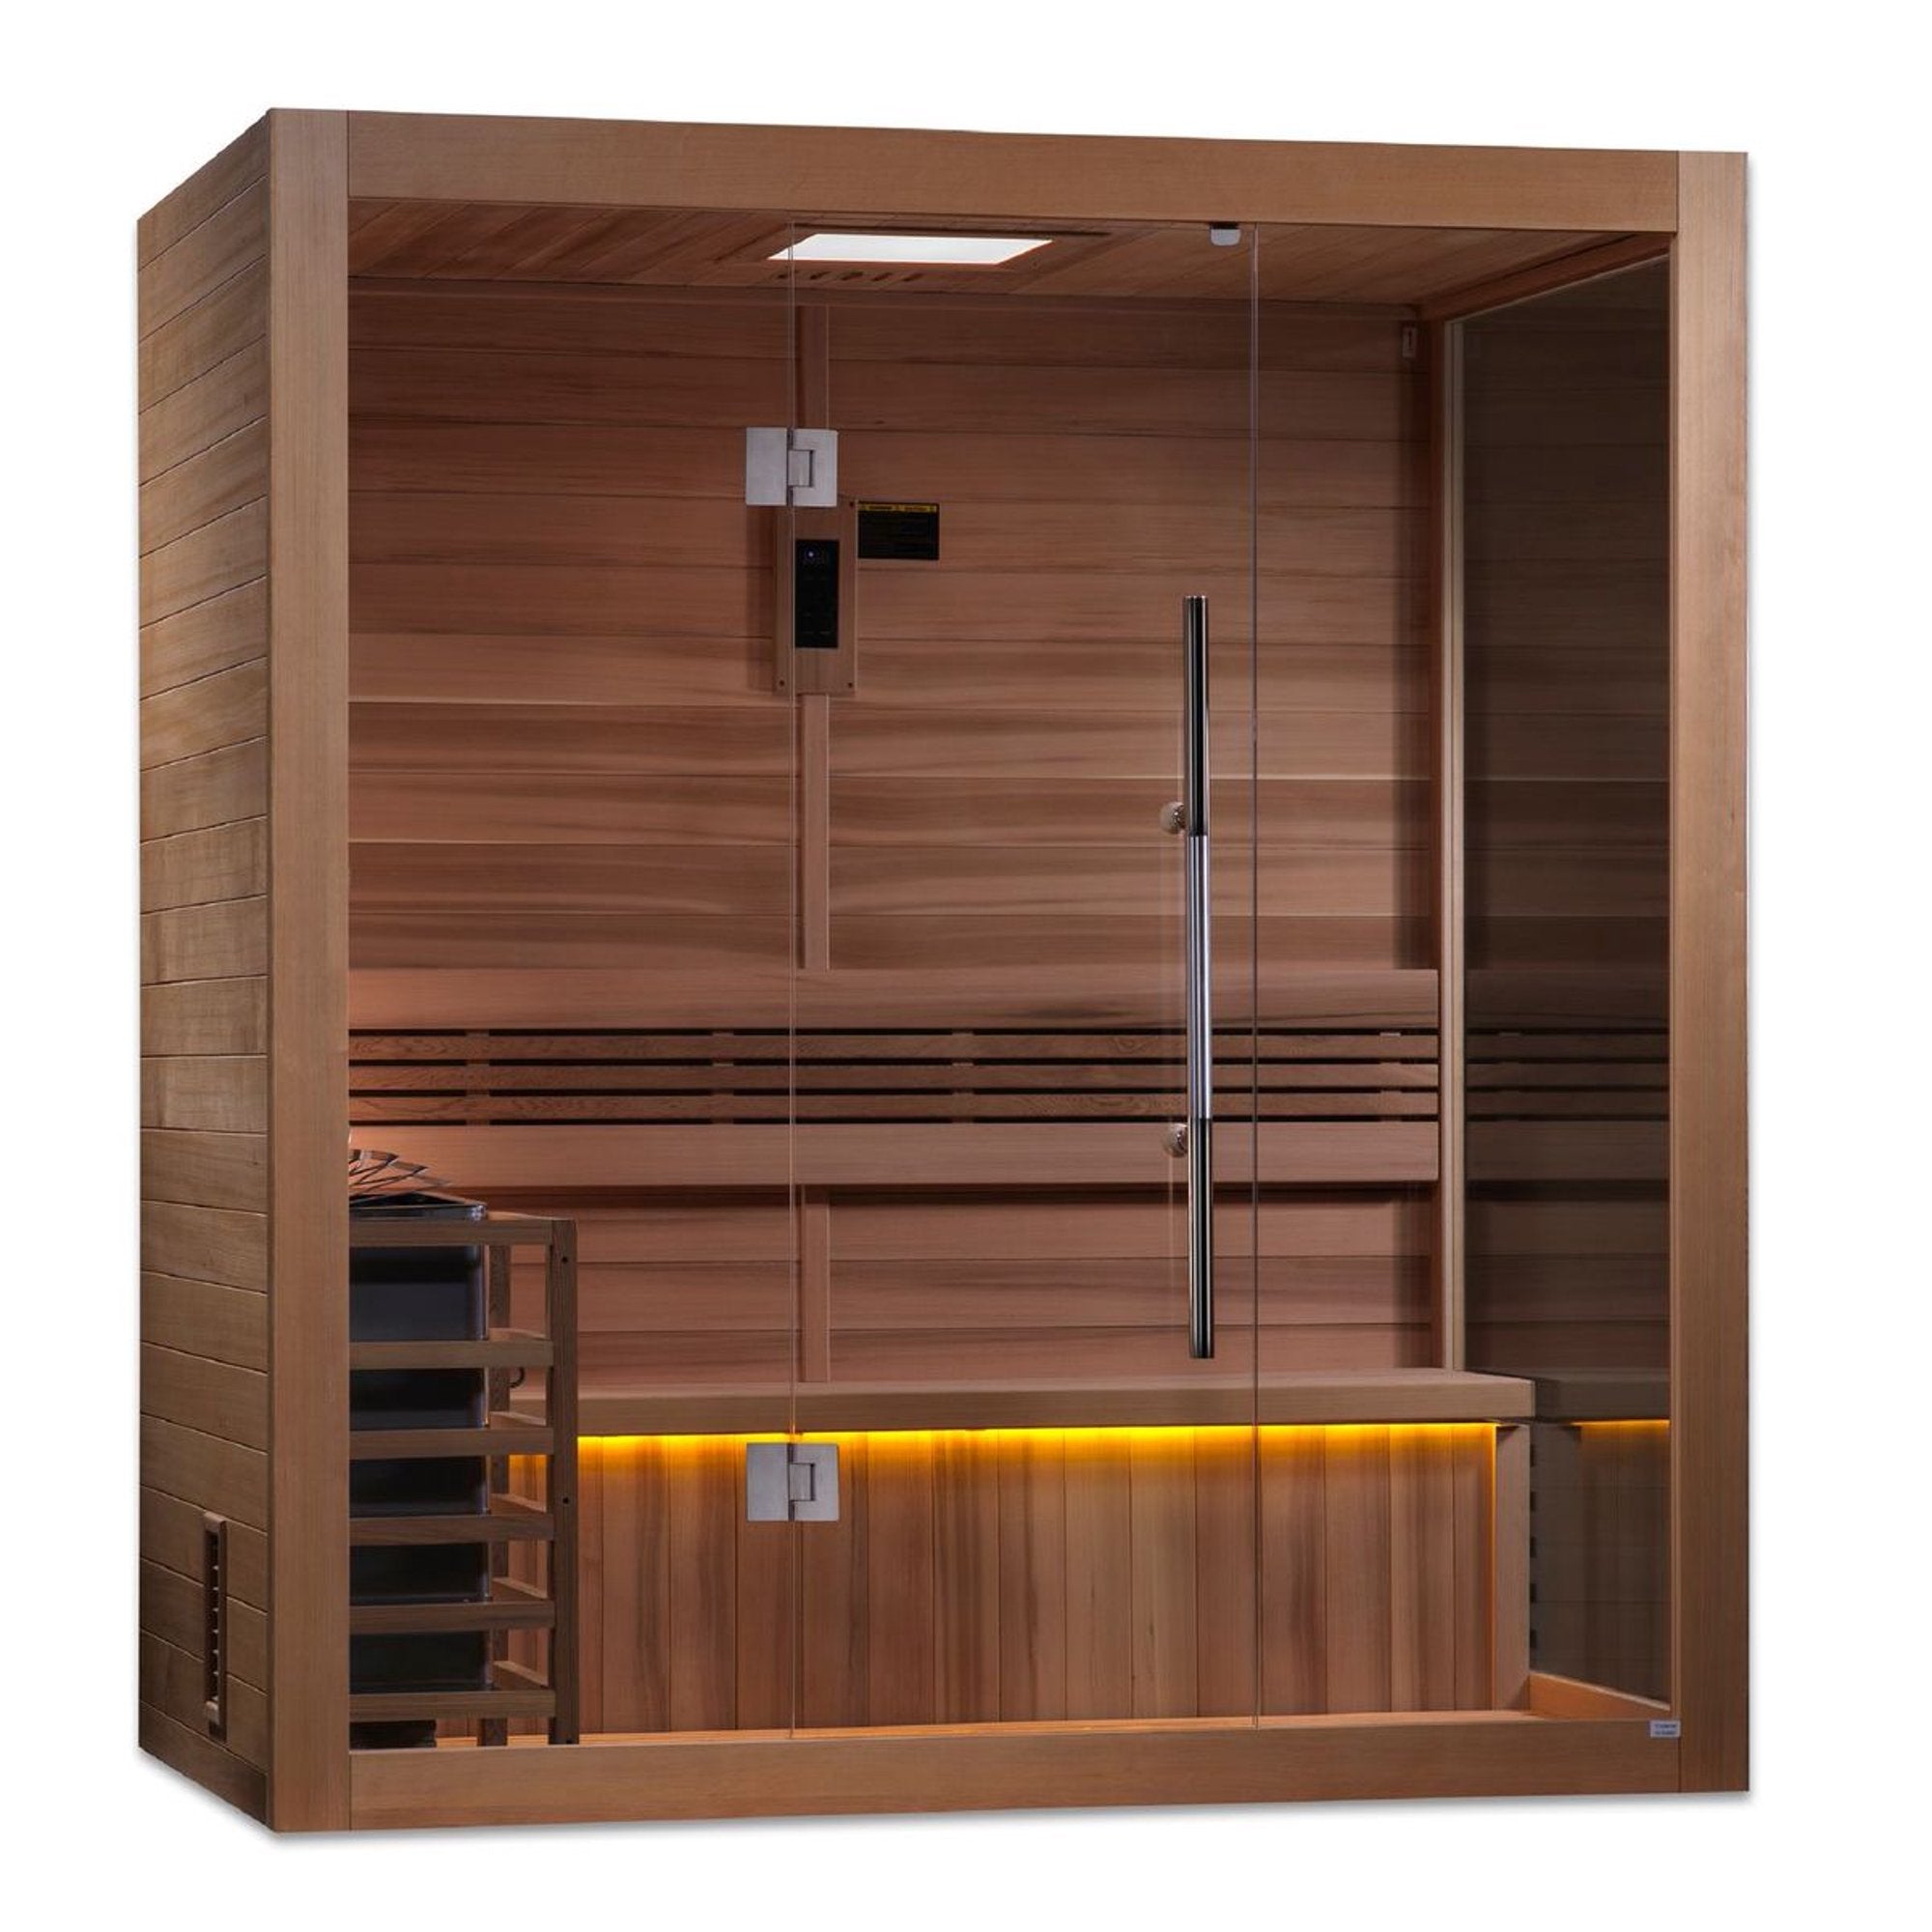 Golden Designs Forssa Edition 3 Person Indoor Traditional Sauna Indoor Sauna Golden Designs Saunas   